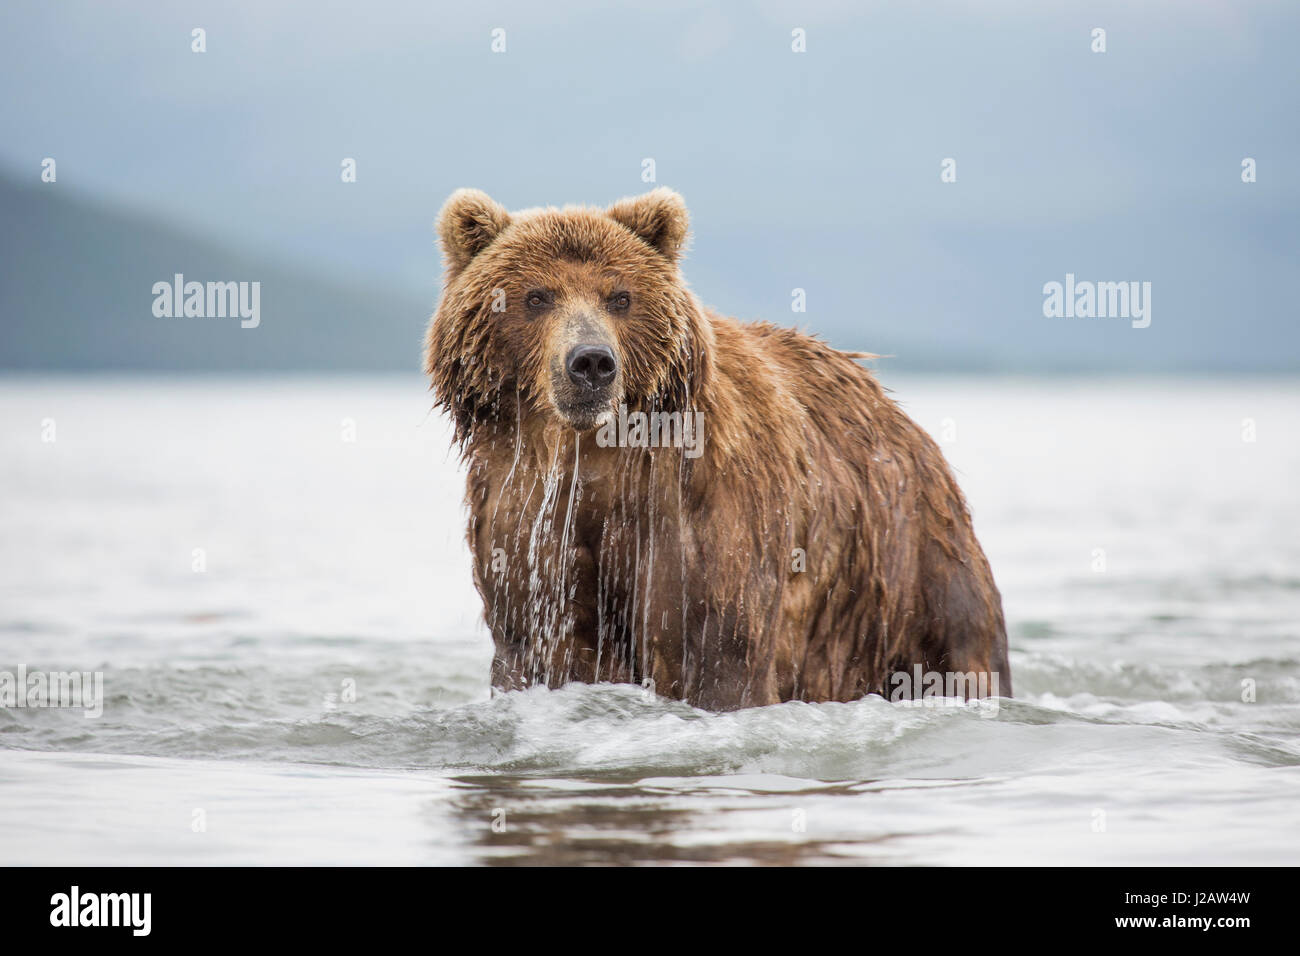 Kamchatka brown bear in lake, Kurile Lake, Kamchatka Peninsula, Russia Stock Photo